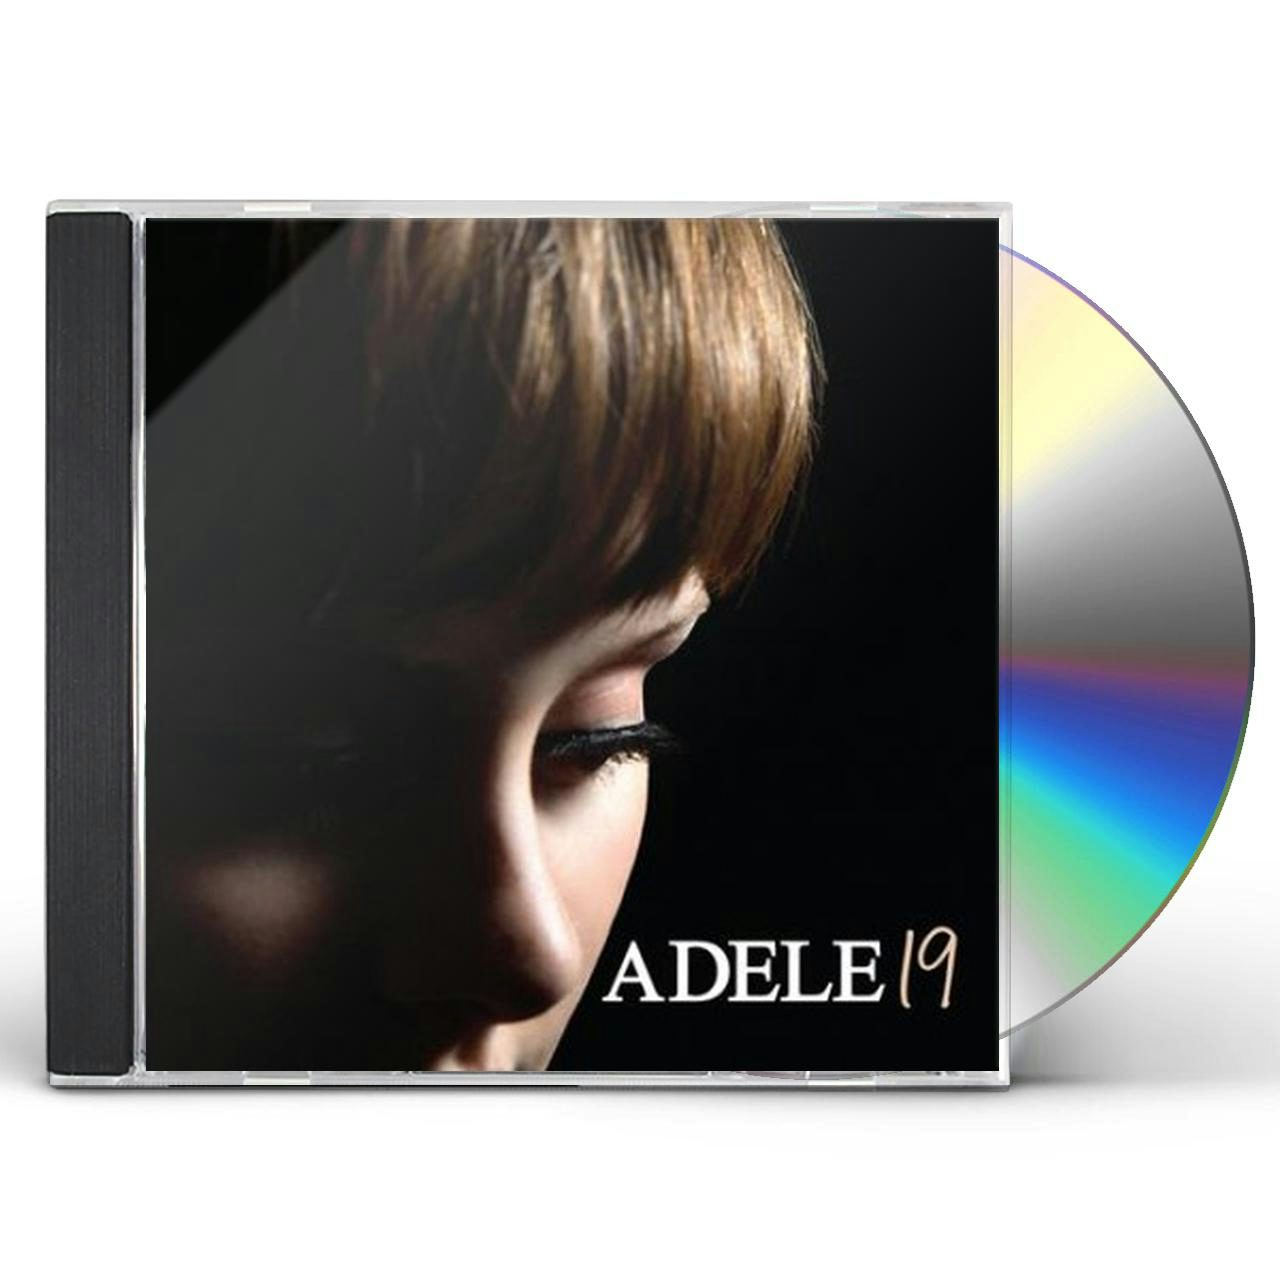 adele 19 full album free mp3 download zip